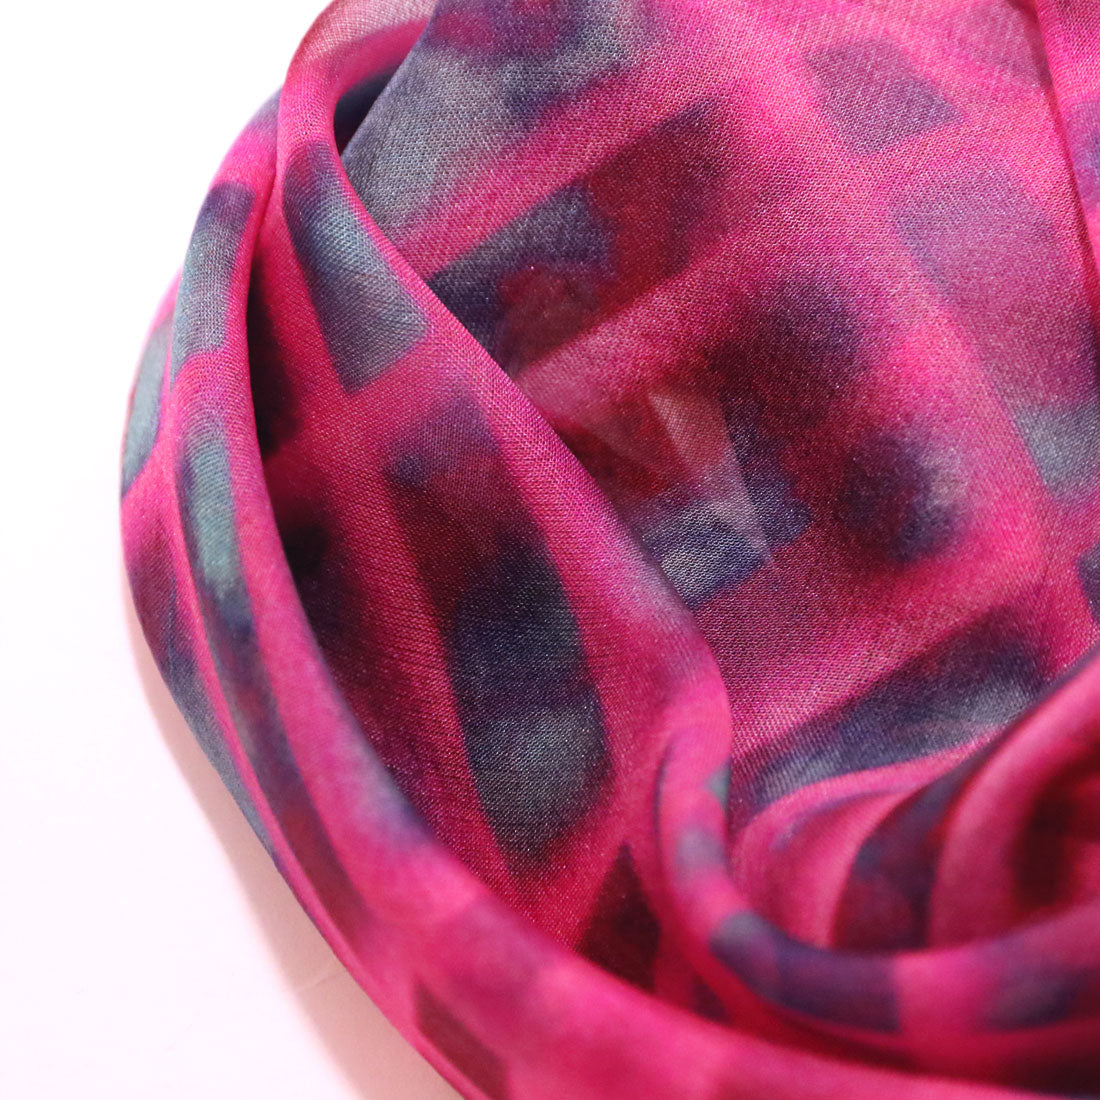 buy beautiful fashion pink silk scarves online paris taipei tokyo スカーフ スカーフコーデ harrods isetan farfetch pink brink chiffon